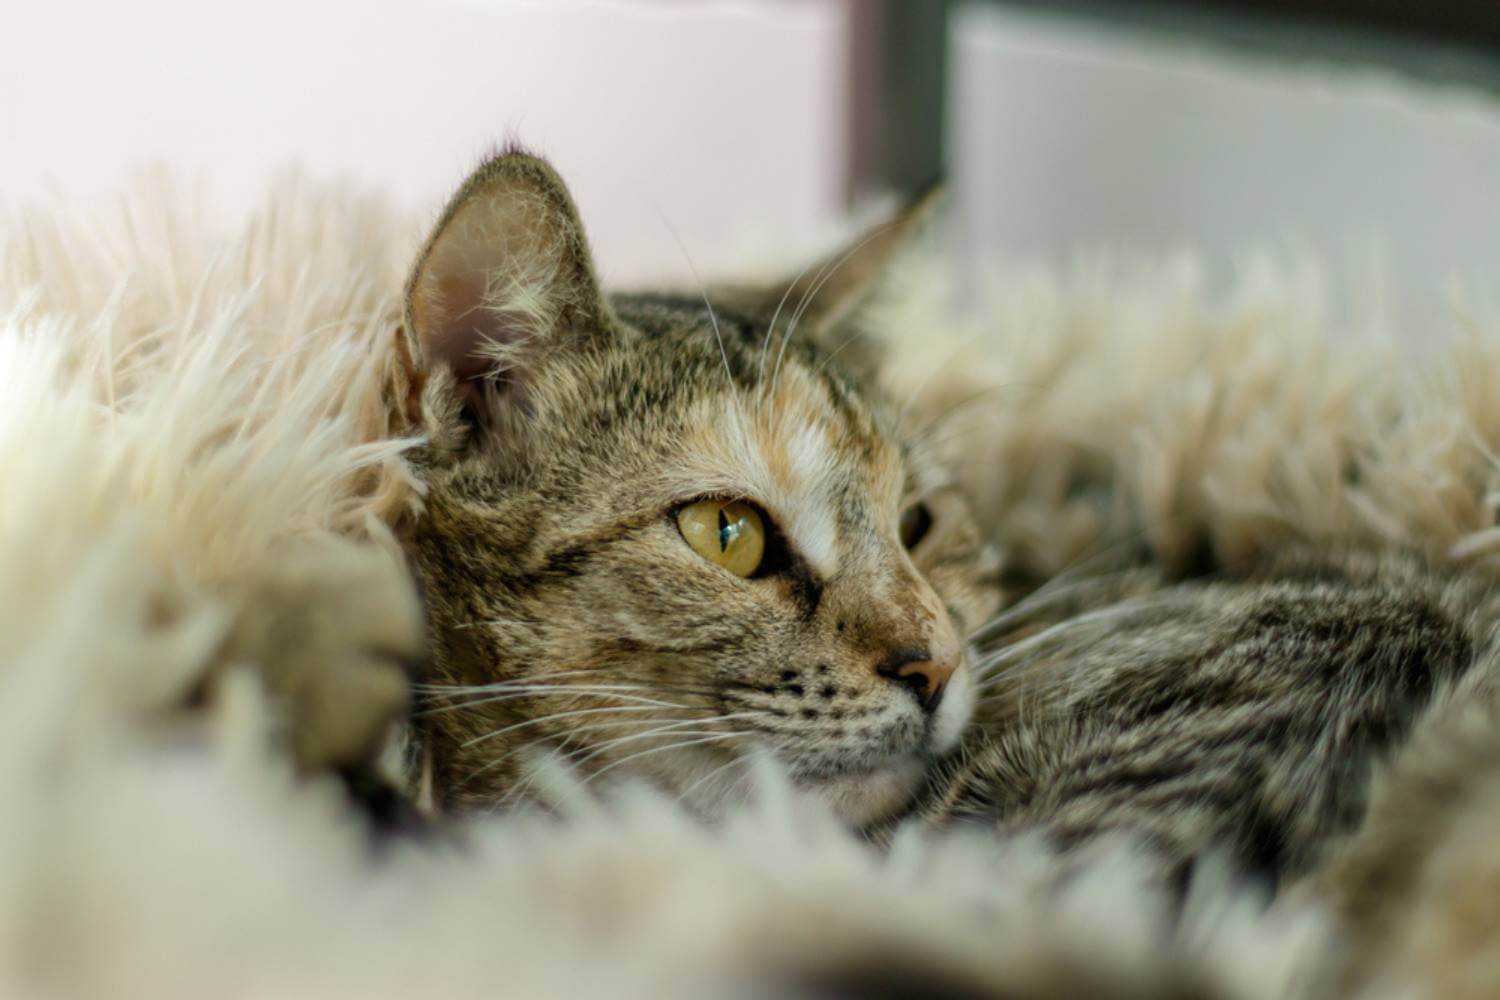 Jacksonville Cat in Blanket